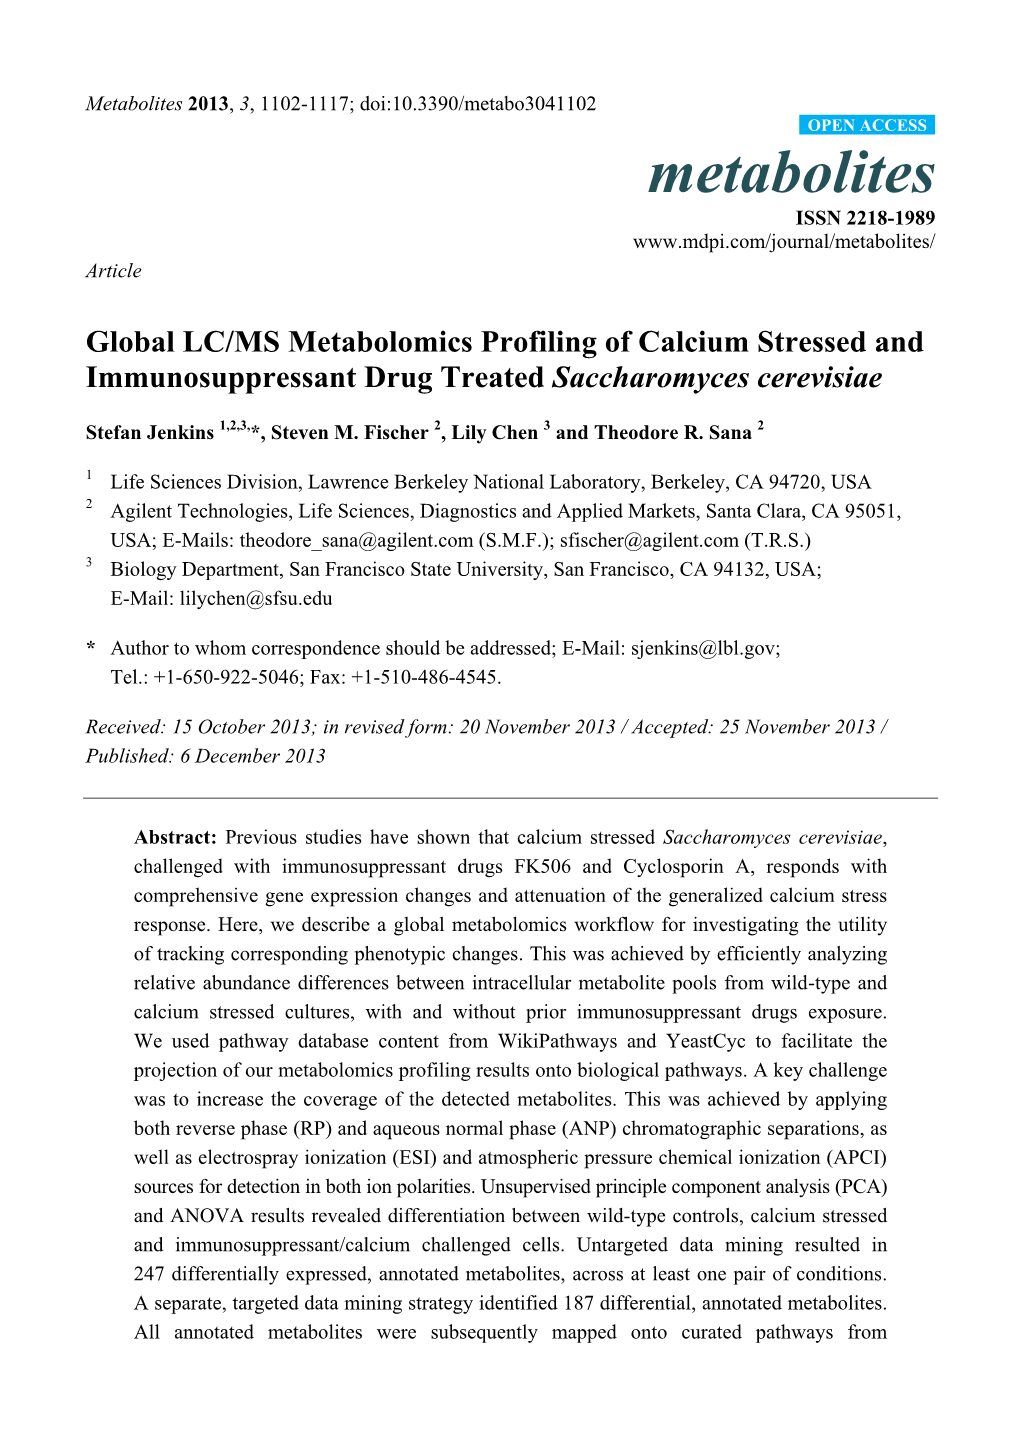 Global LC/MS Metabolomics Profiling of Calcium Stressed and Immunosuppressant Drug Treated Saccharomyces Cerevisiae